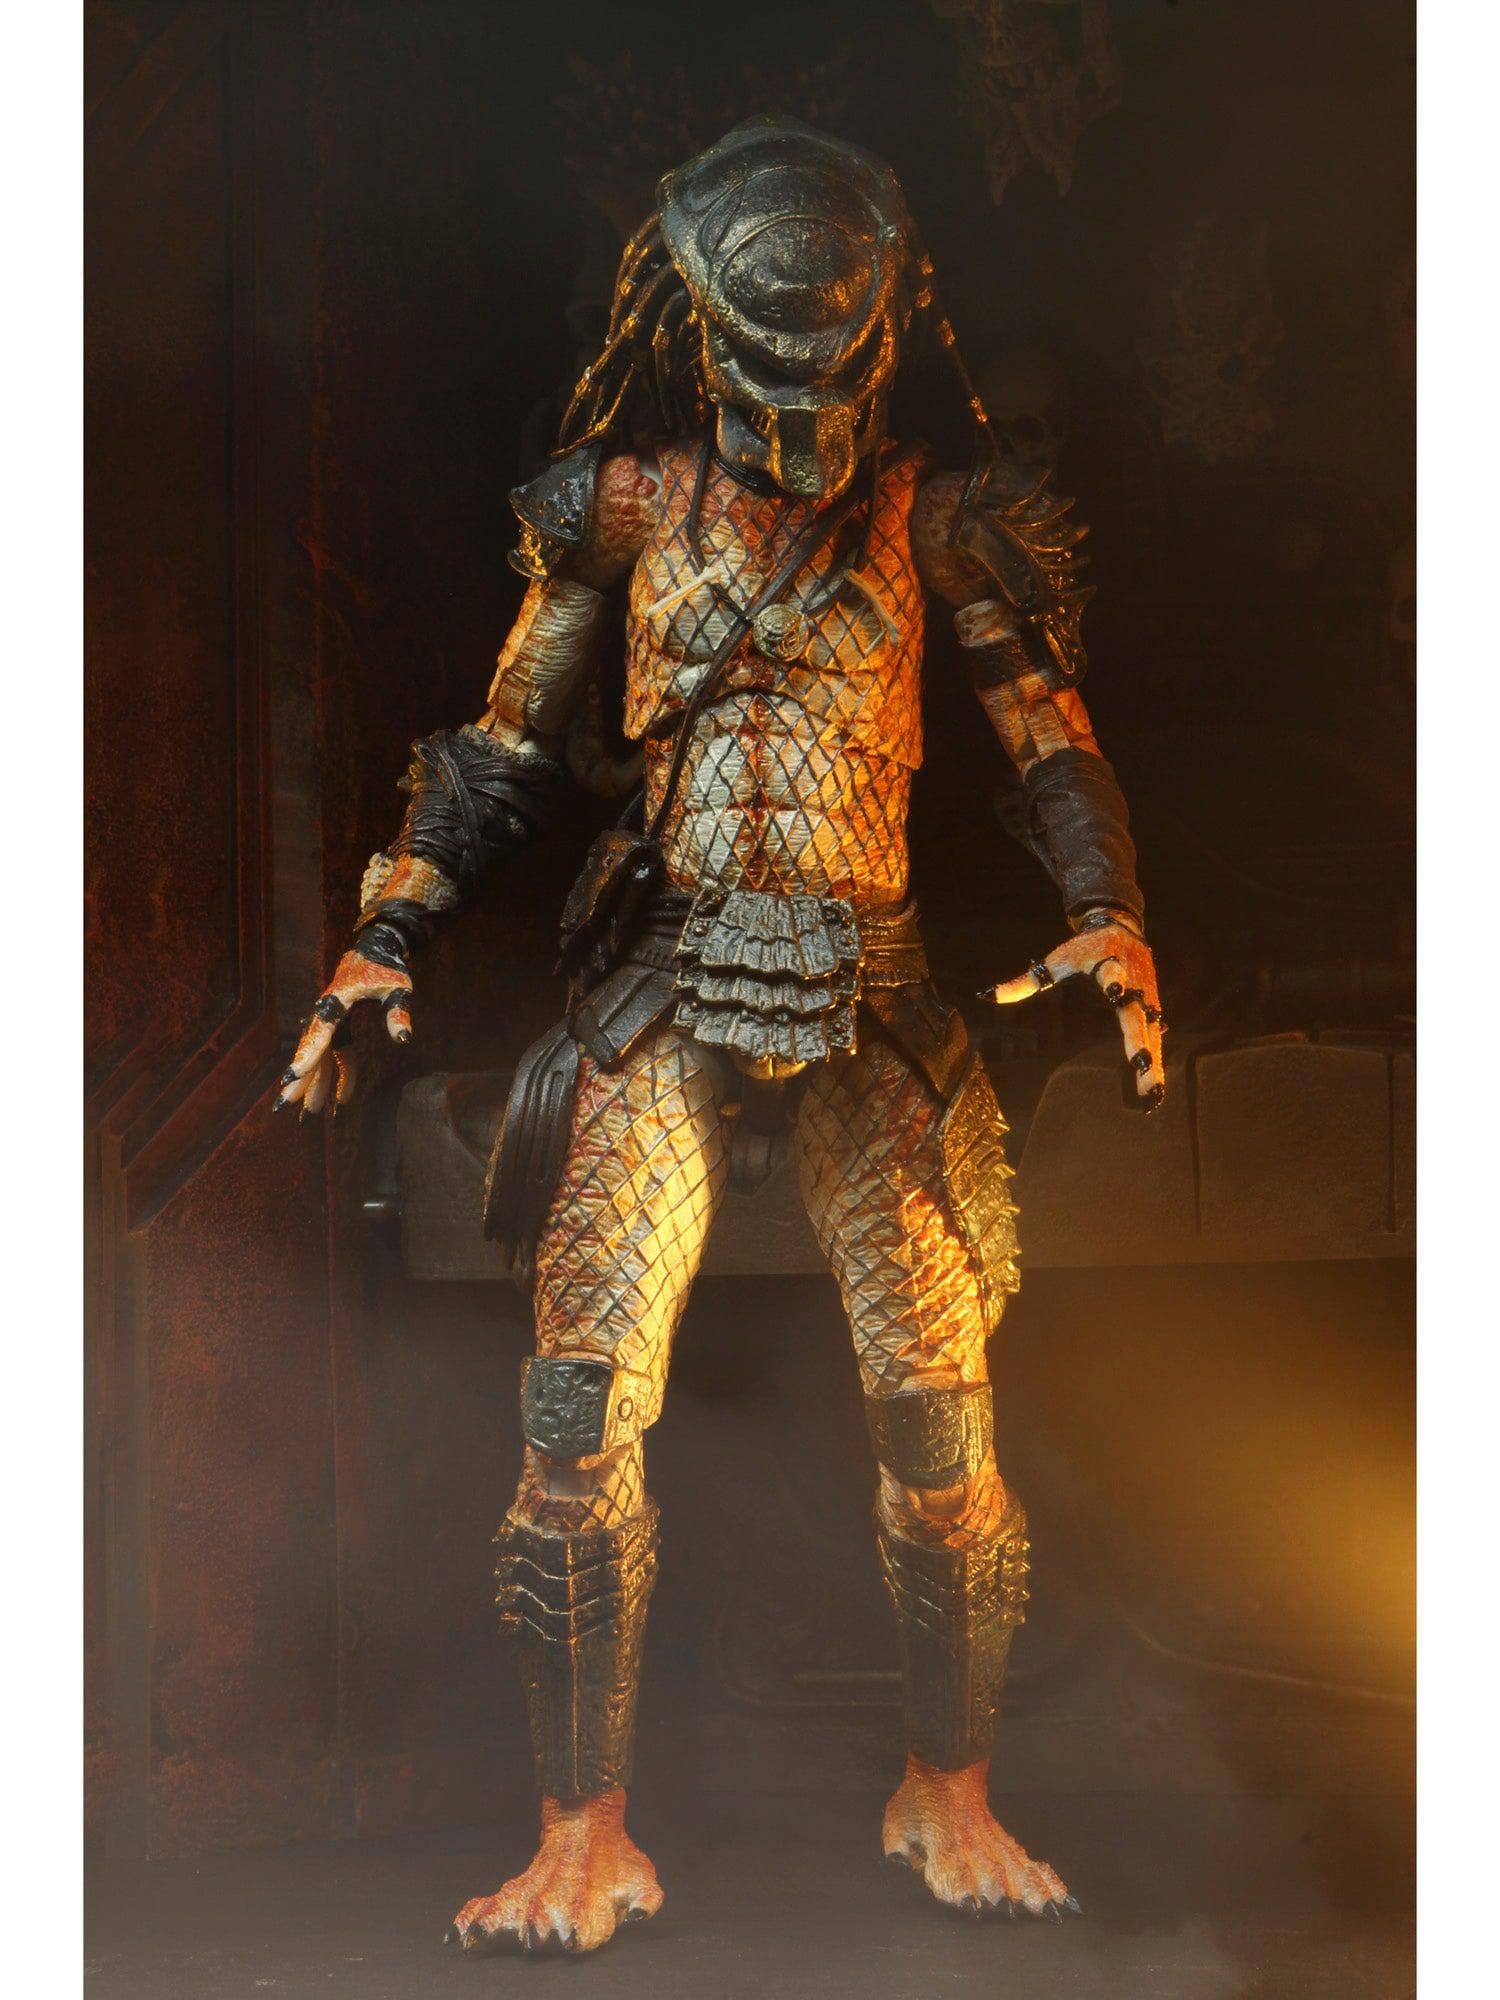 NECA - Predator 2 - 7" Scale Action Figure - Ultimate Stalker Predator - costumes.com